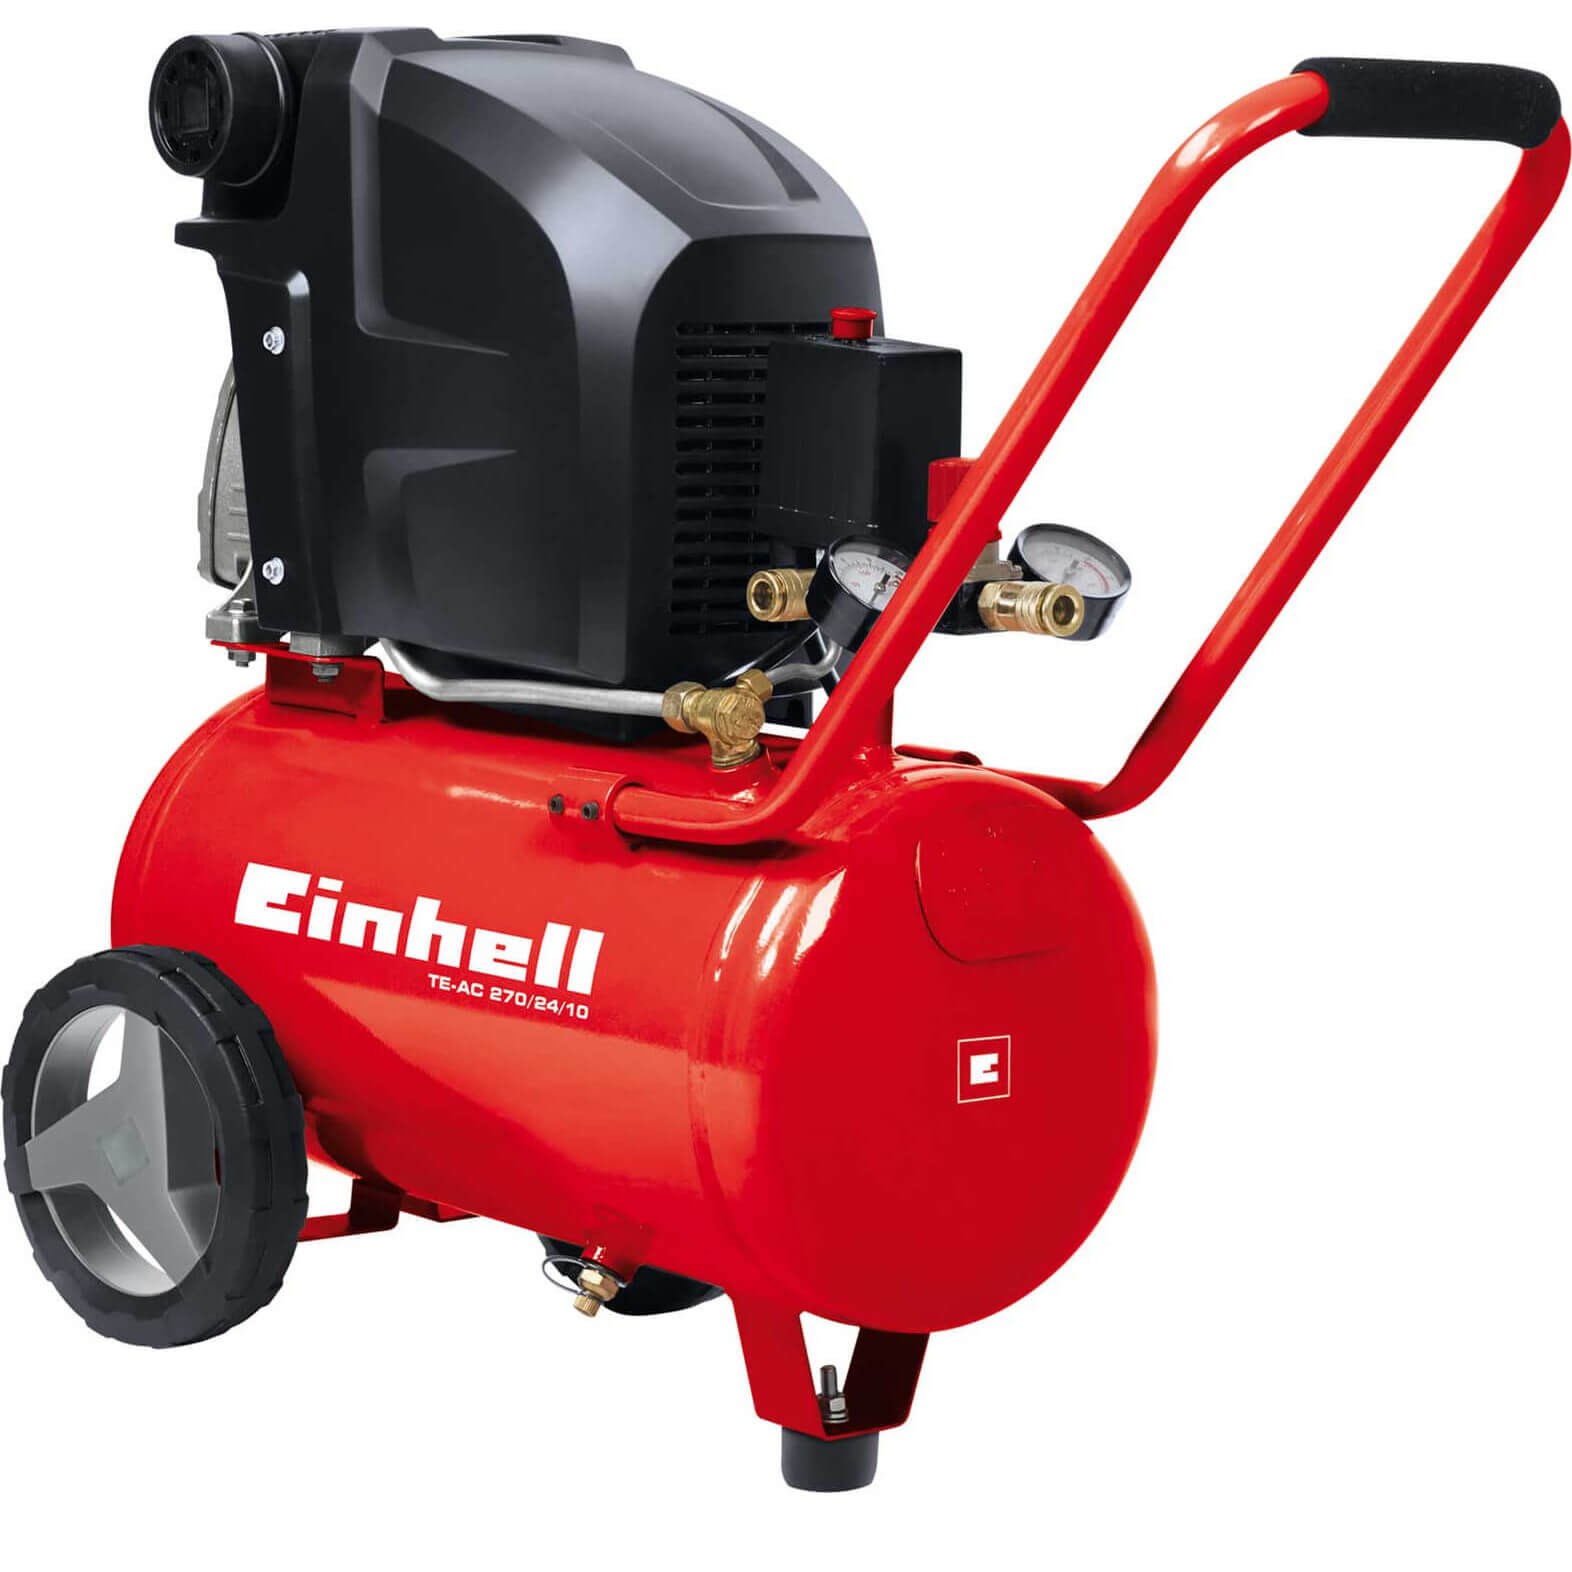 Einhell TE-AC 270/24/10 Air Compressor 24 Litre | Air Compressors